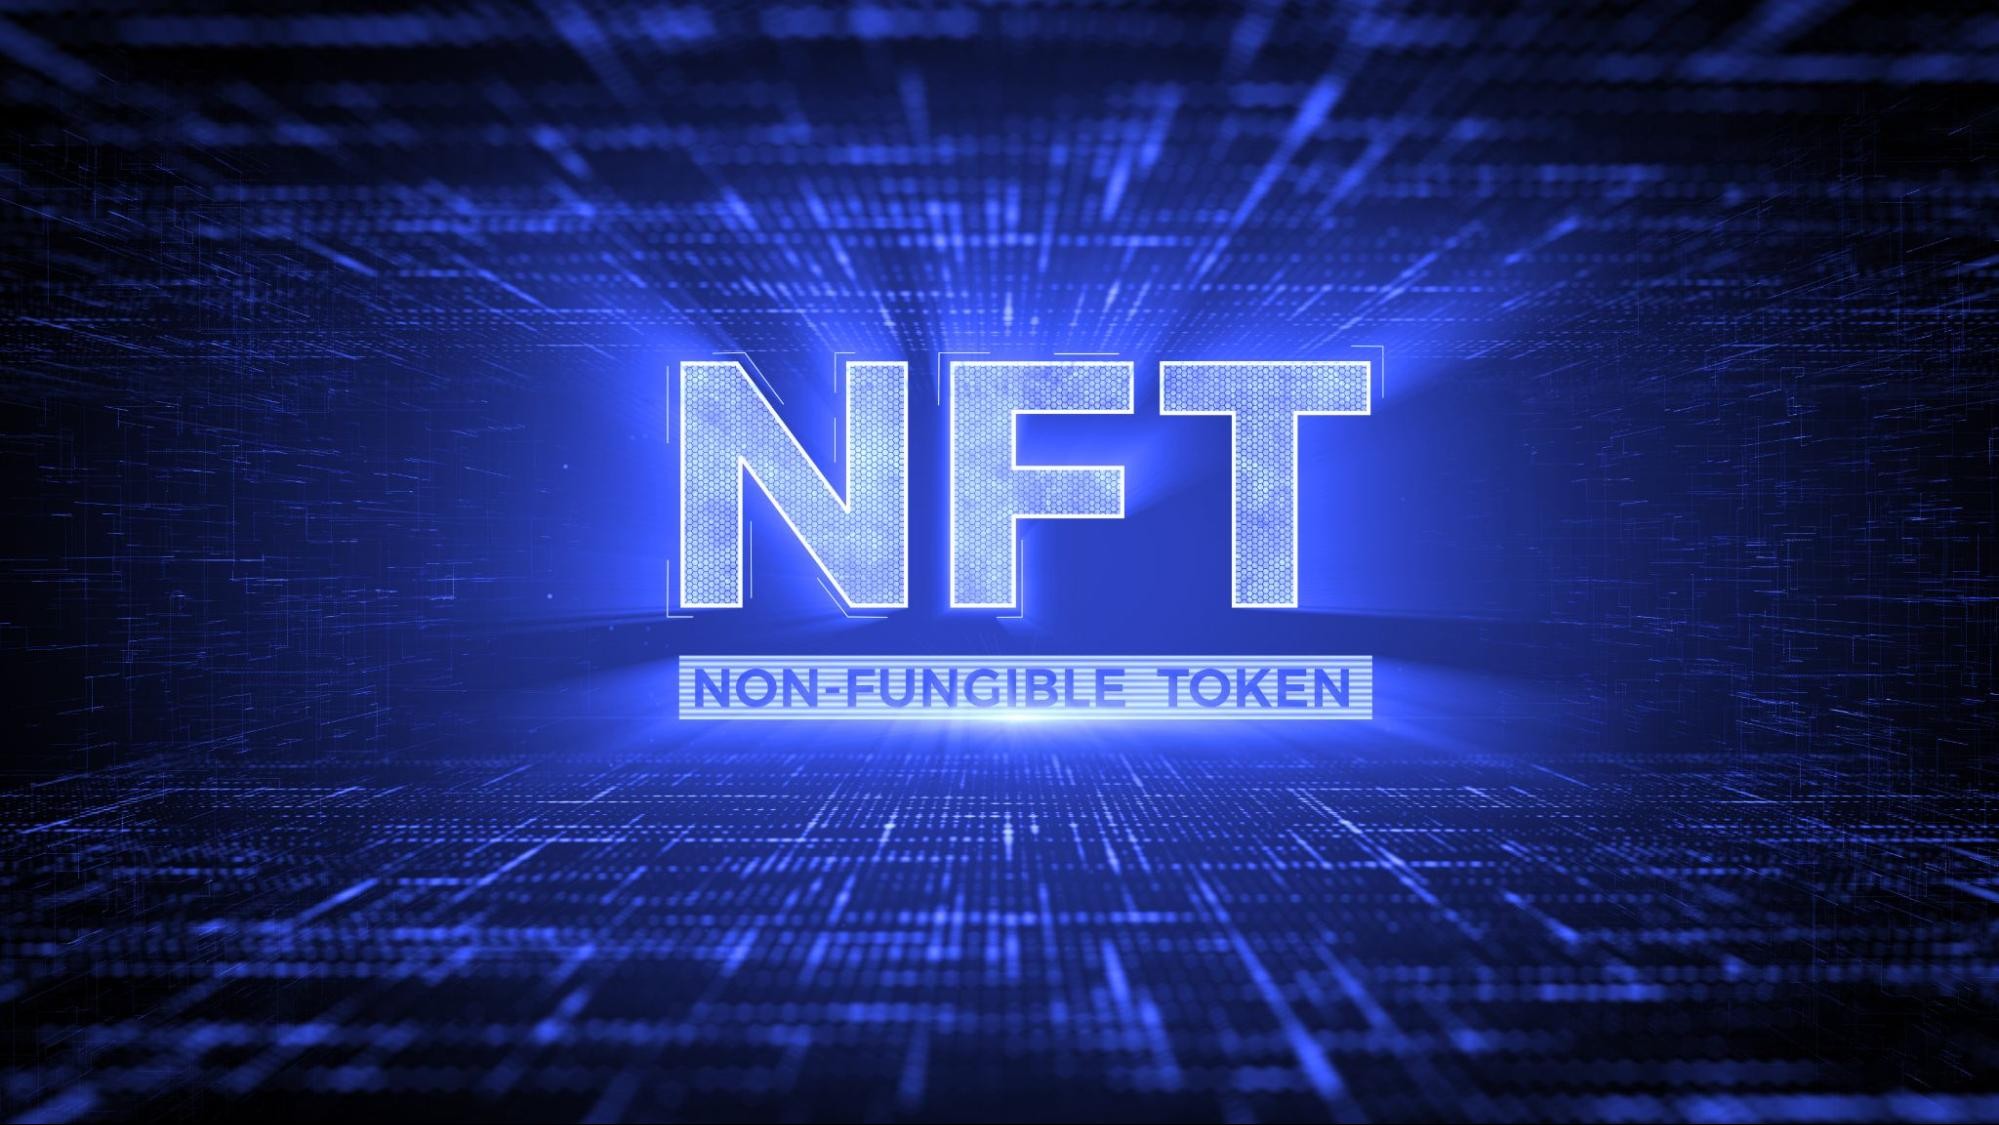 NFT - فن - DeFi - blockchain - بلوكتشين - Digital art